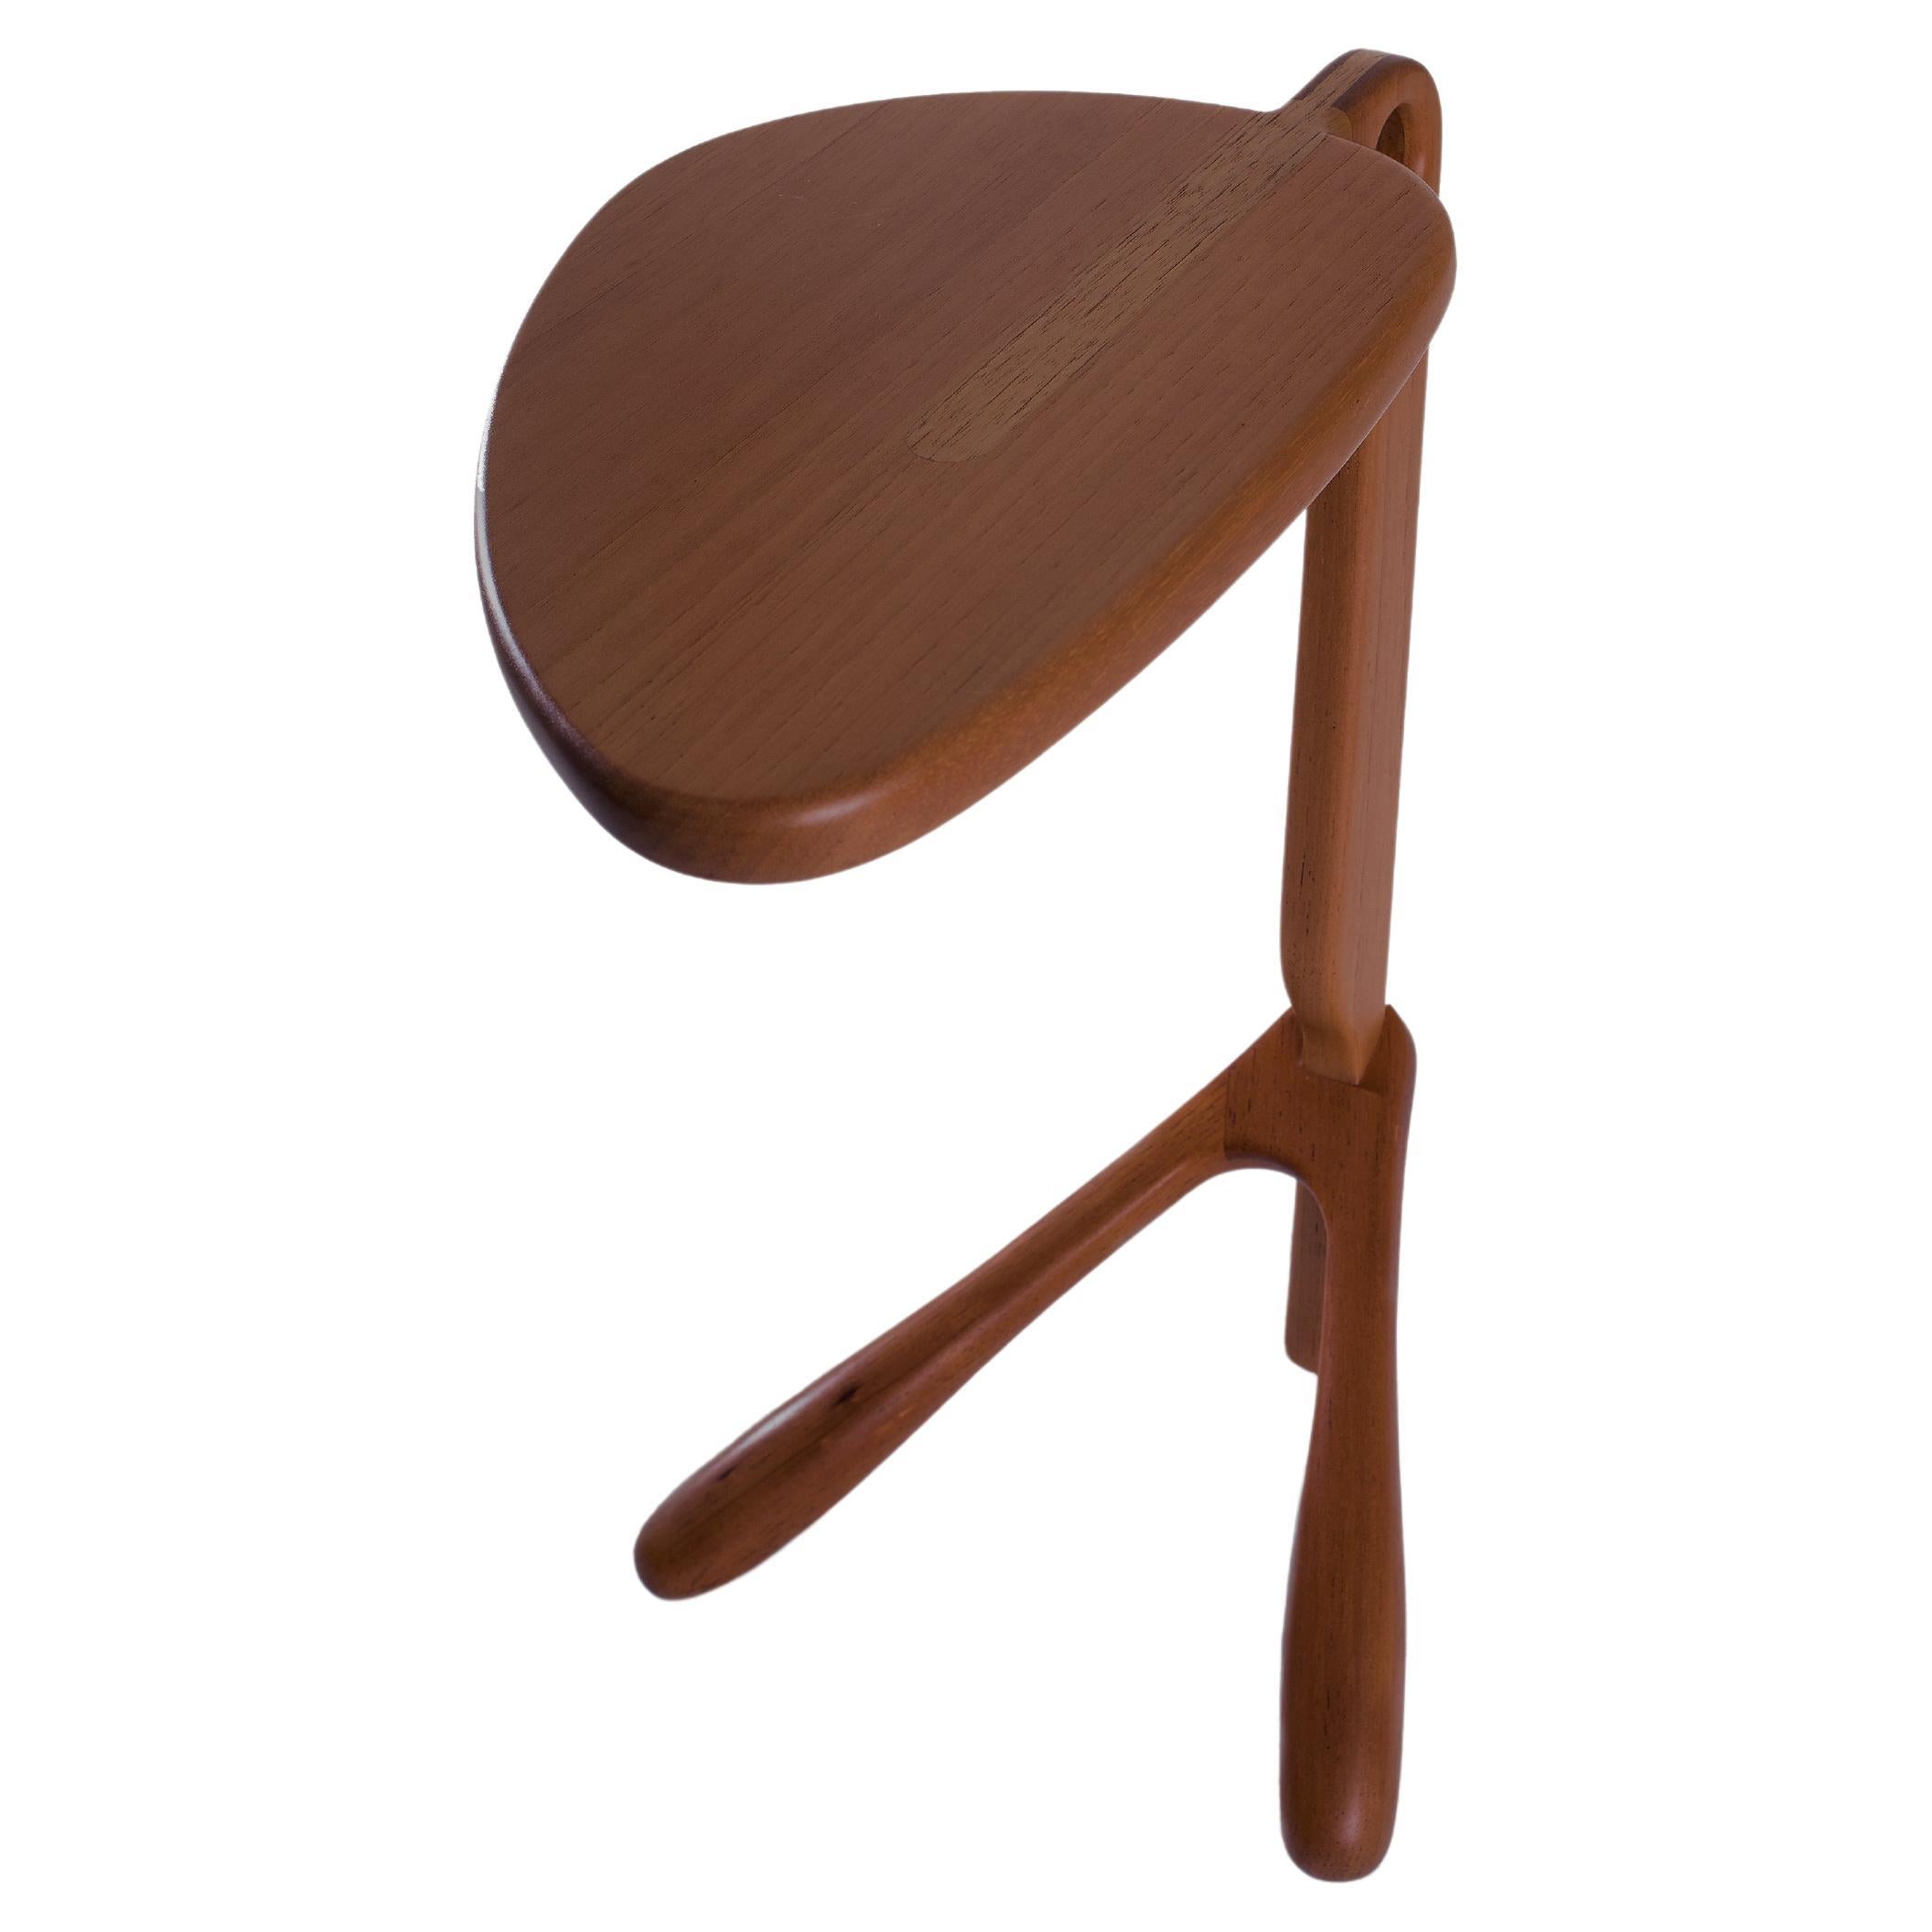 Organic Form Side Table - Broto, MEDIAN size Dark Brown Wood 